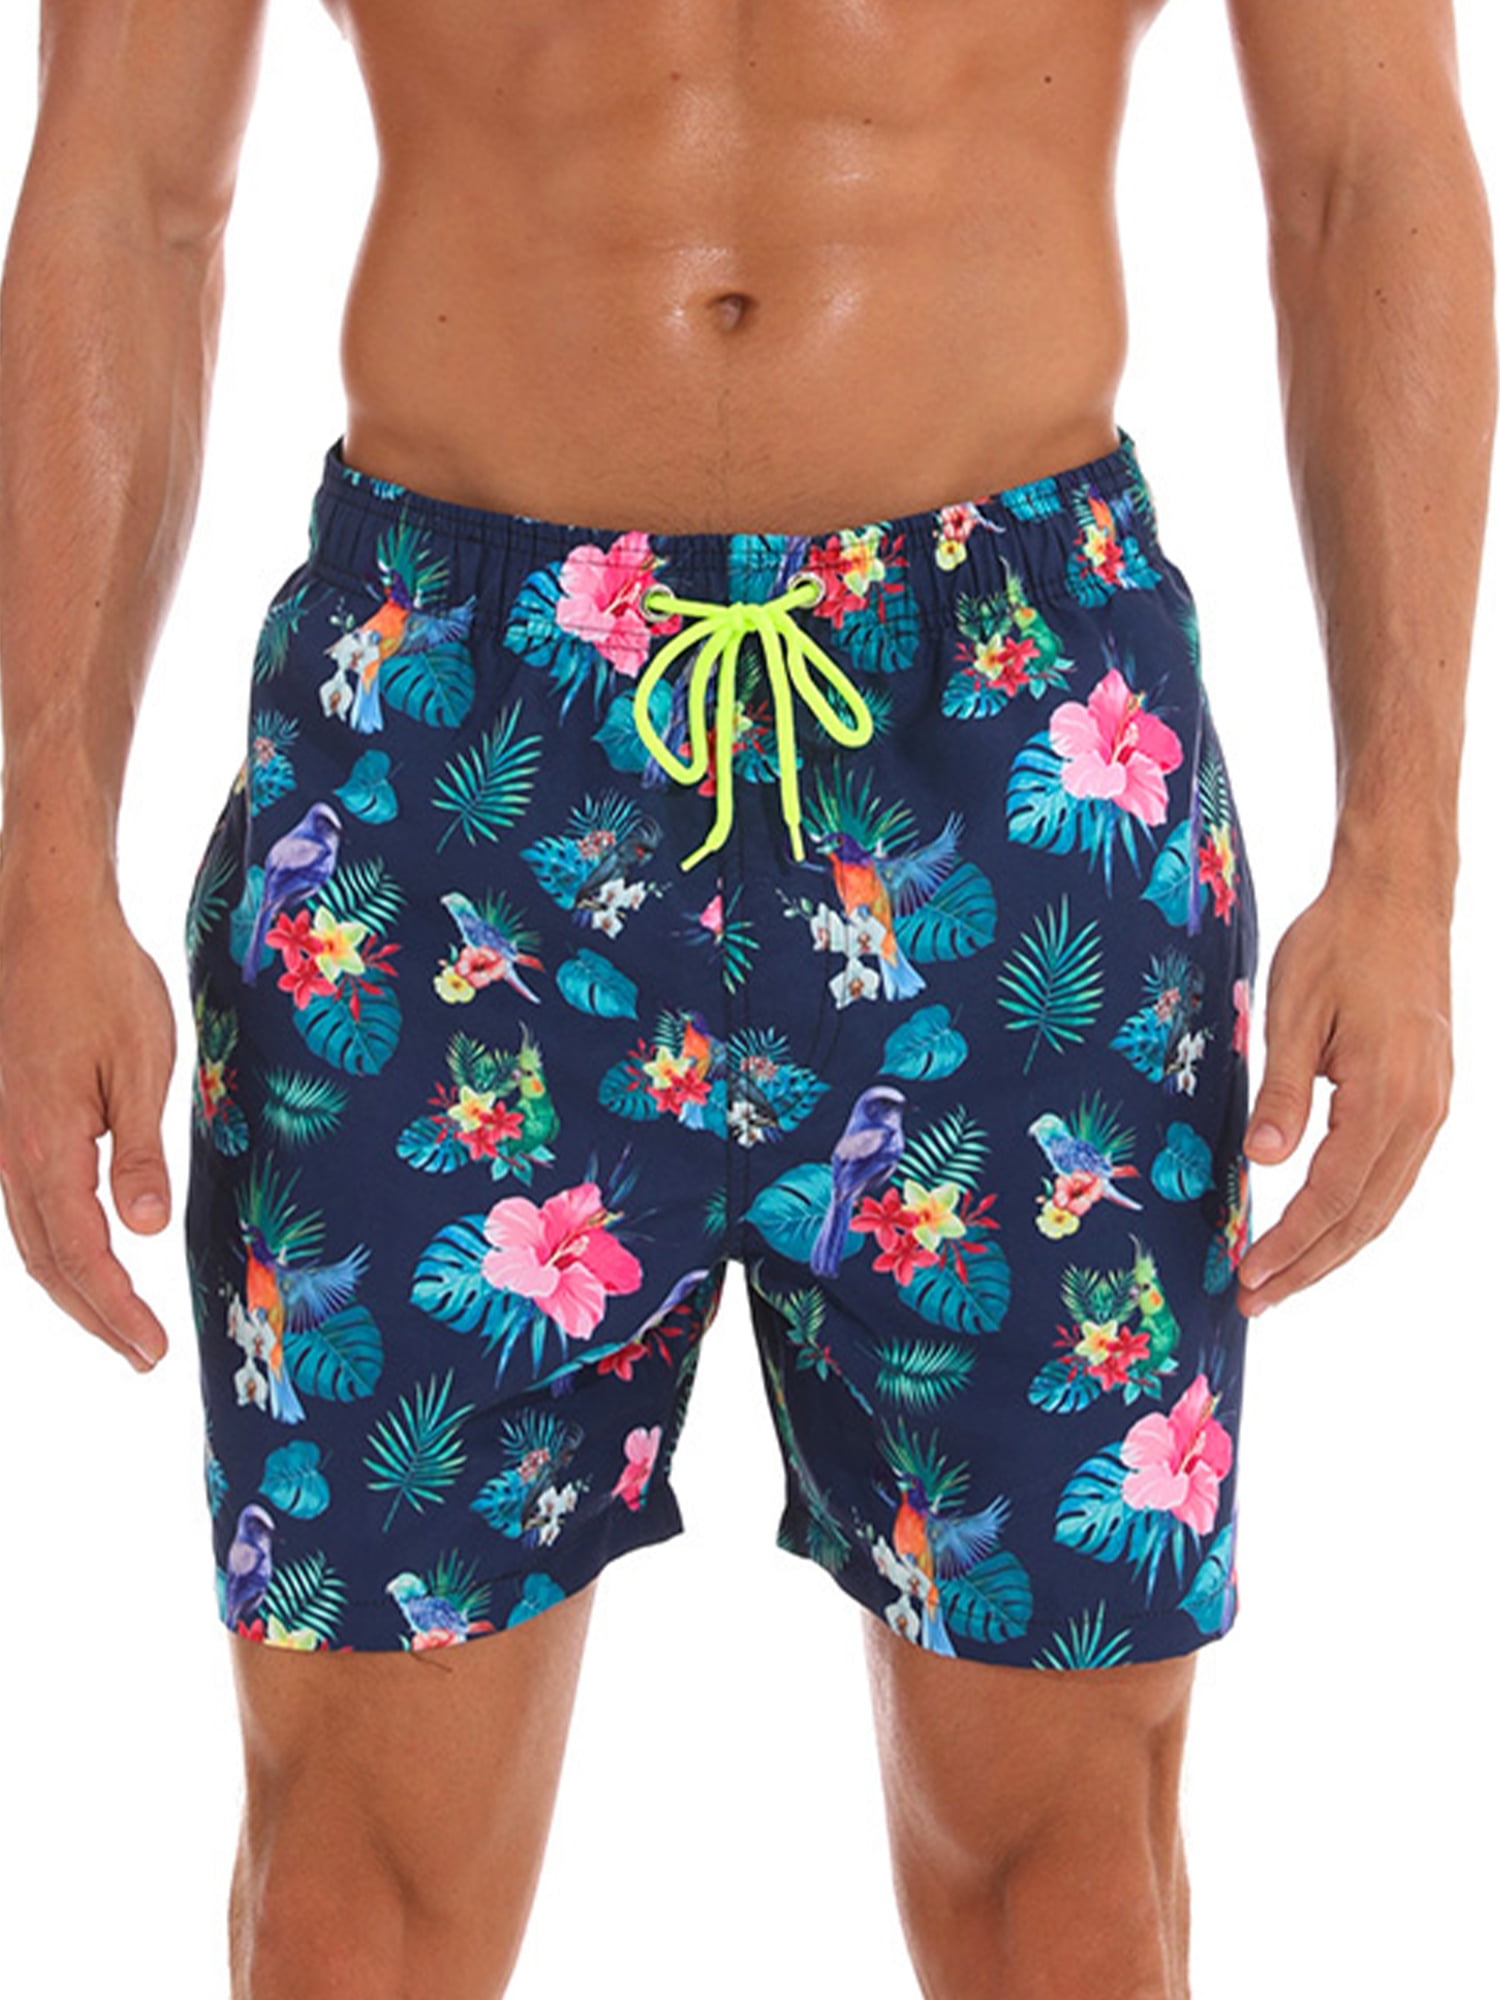 gogoswim No Bad Days Tie Dye Pineapple Mens Swim Trunks Summer Swim Tropical 